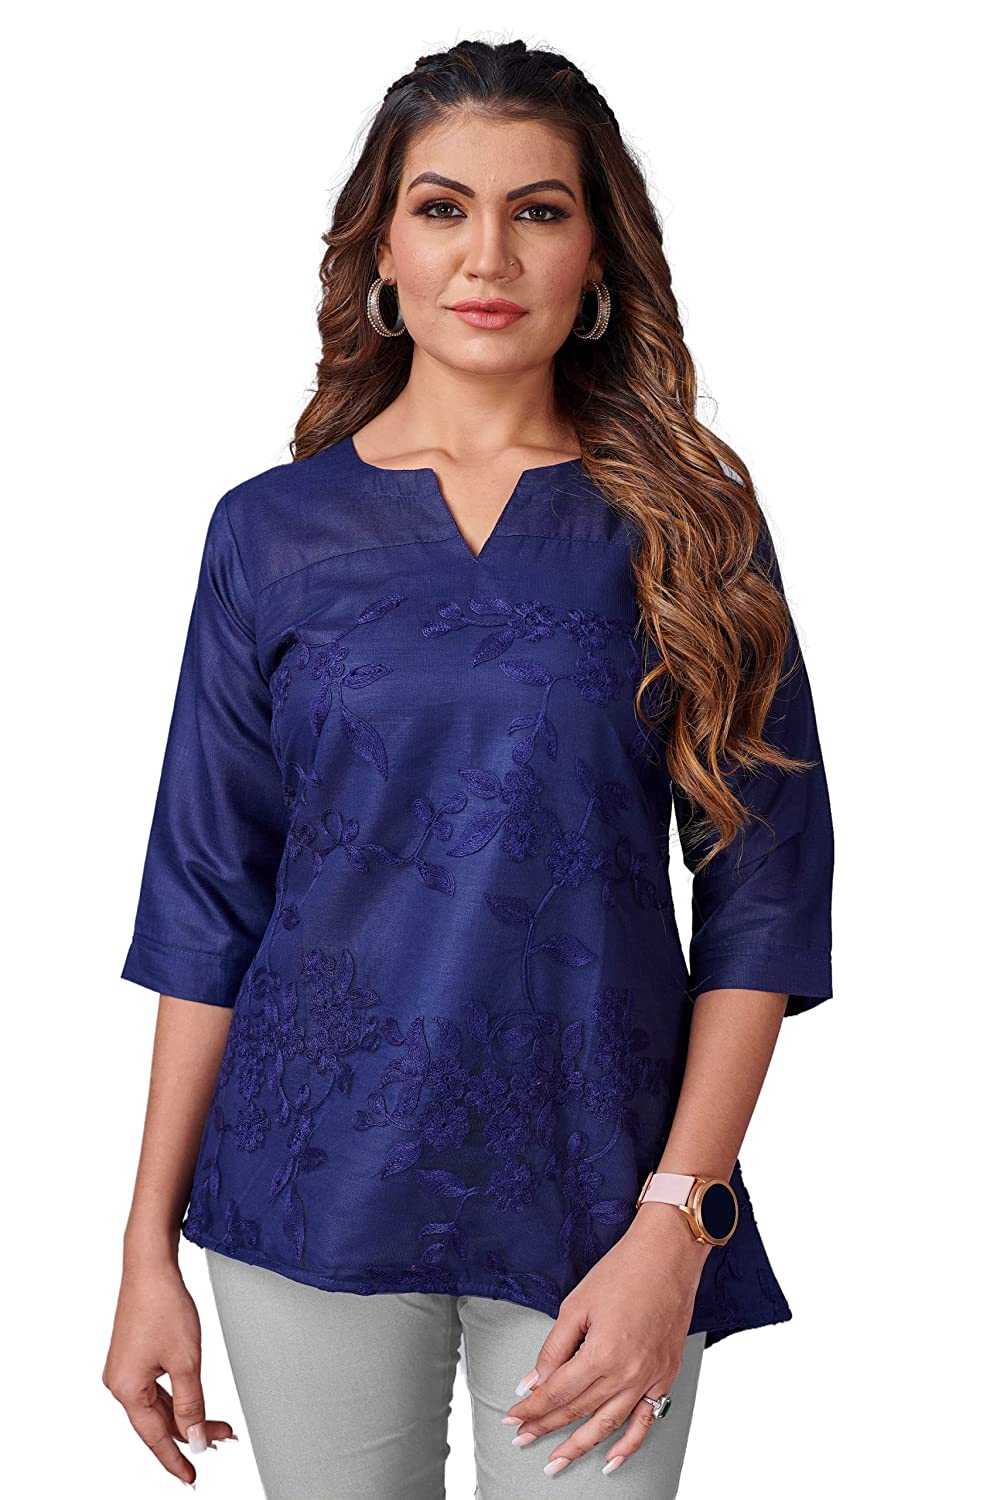 Women's Blue Cotton Blend & Net Embroidered Top